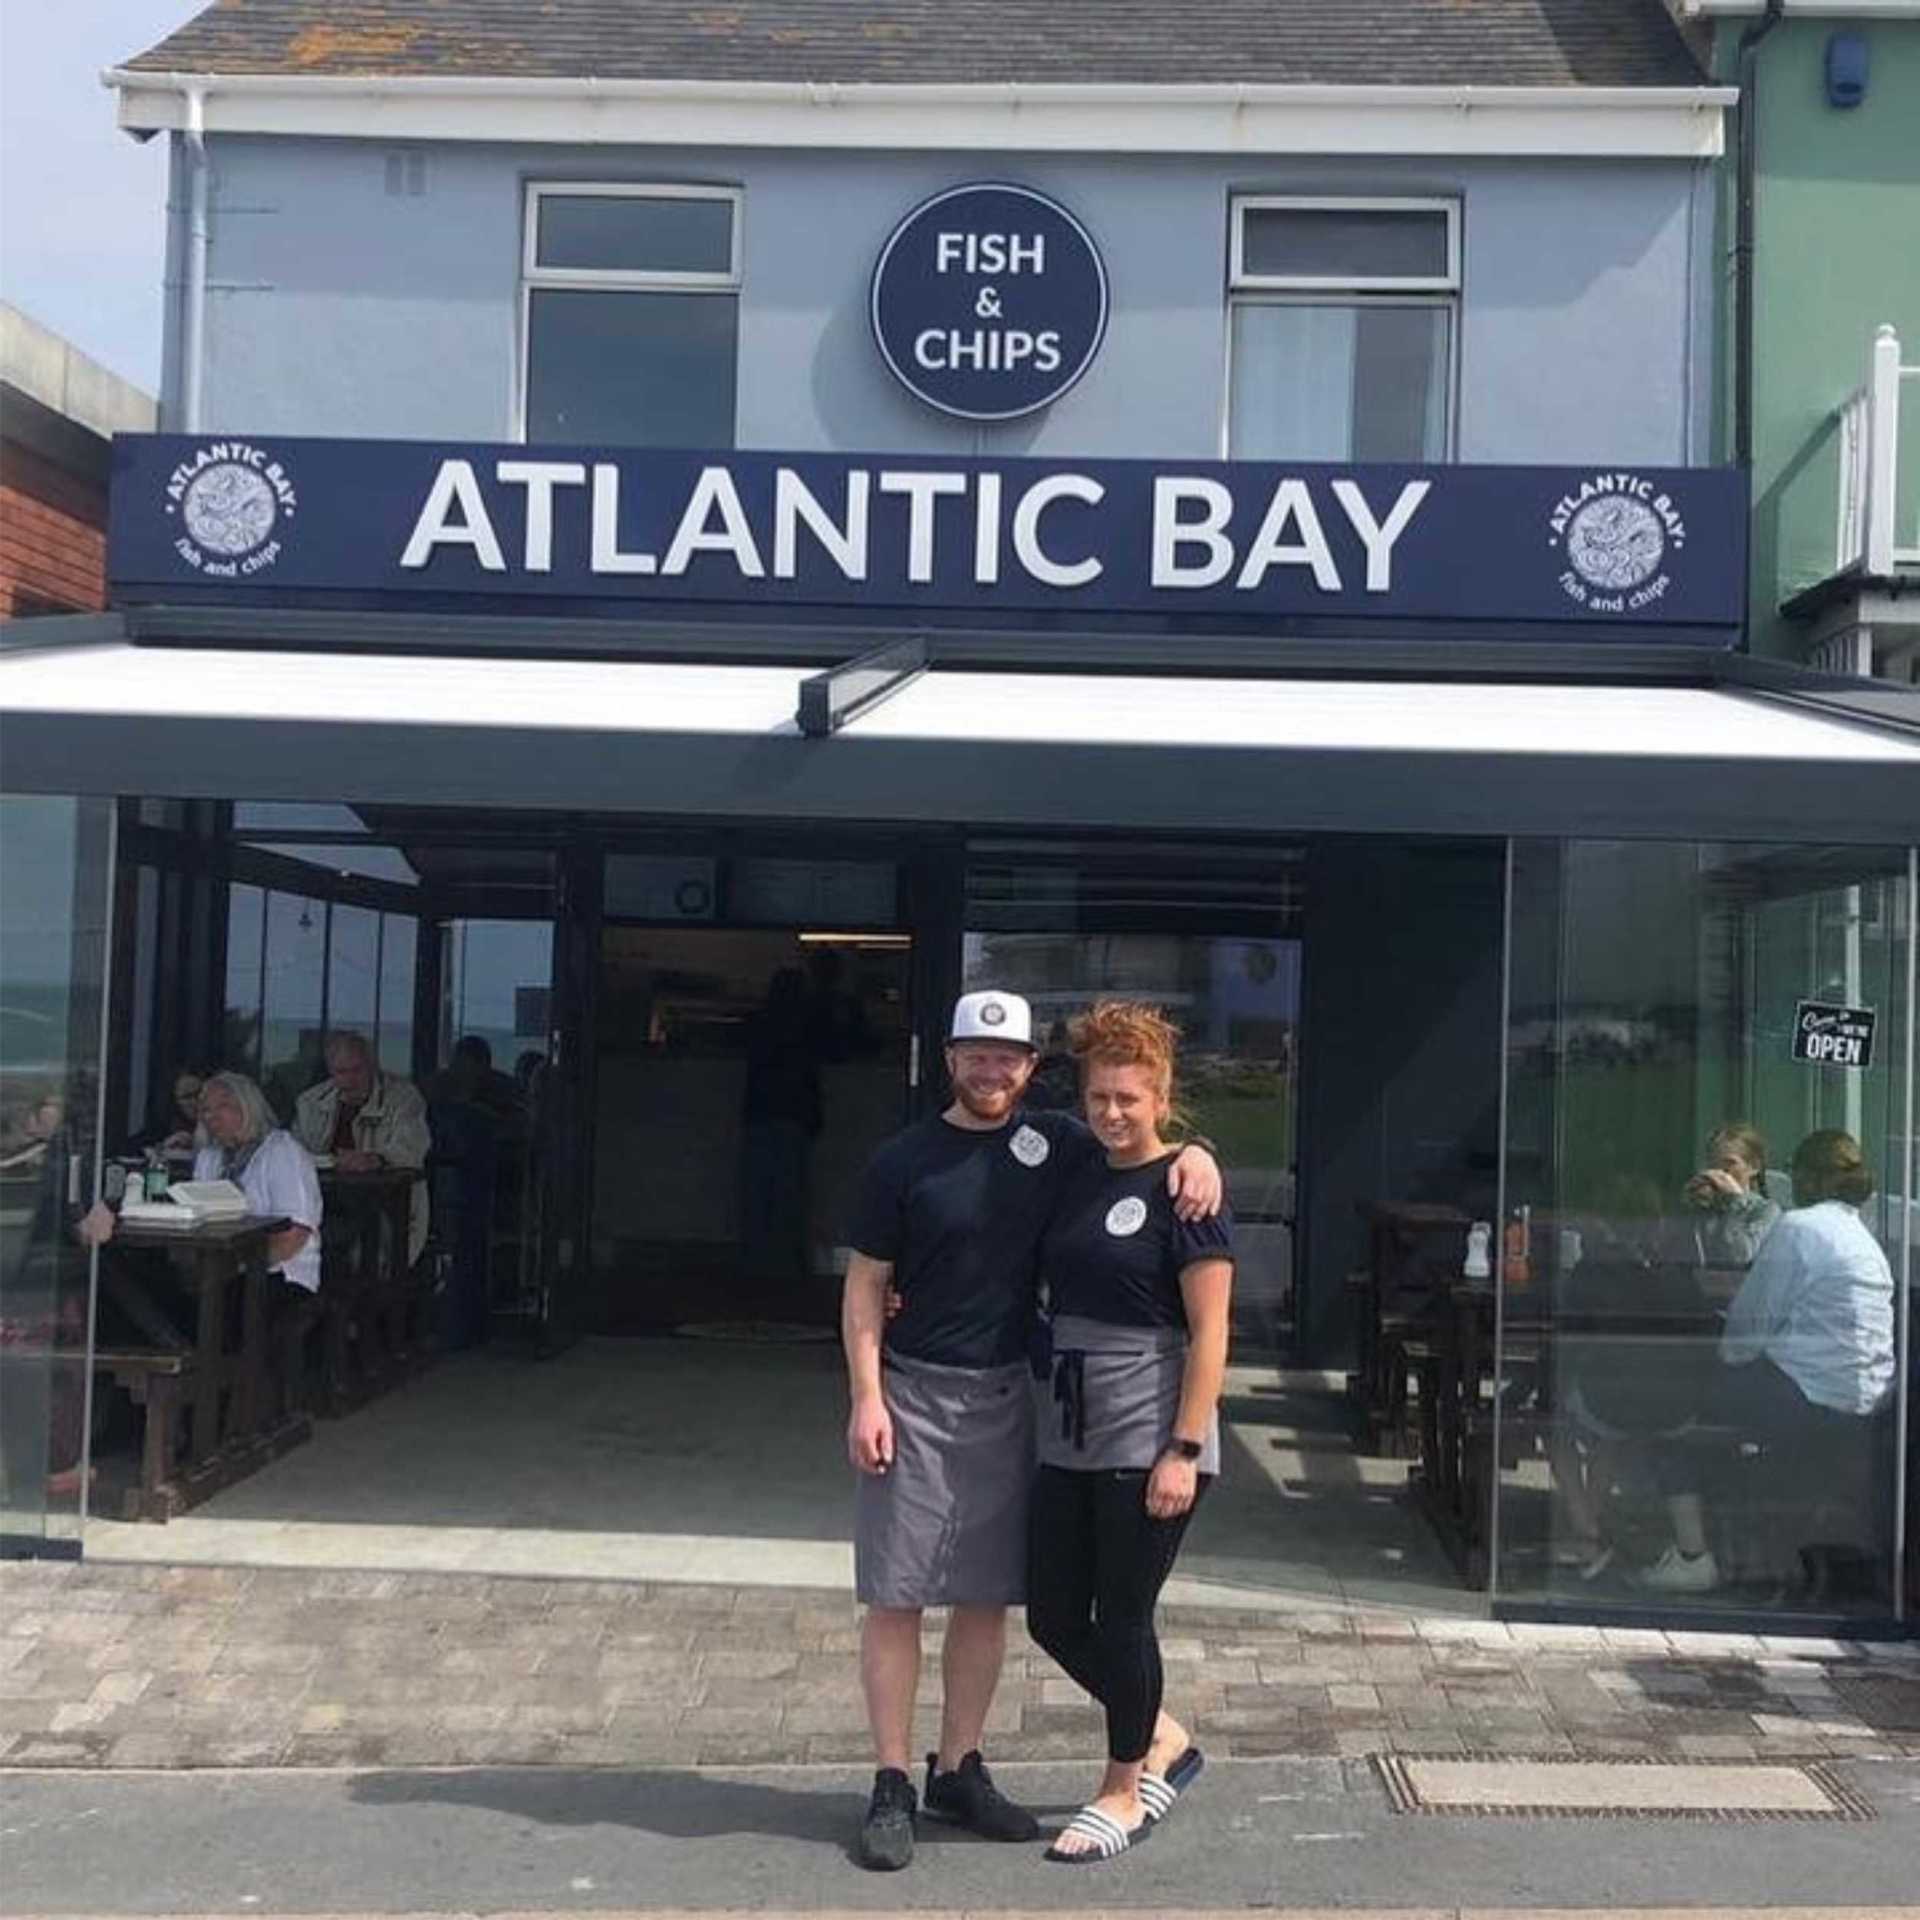 Atlantic Bay chip shop in Westward Ho!, Devon